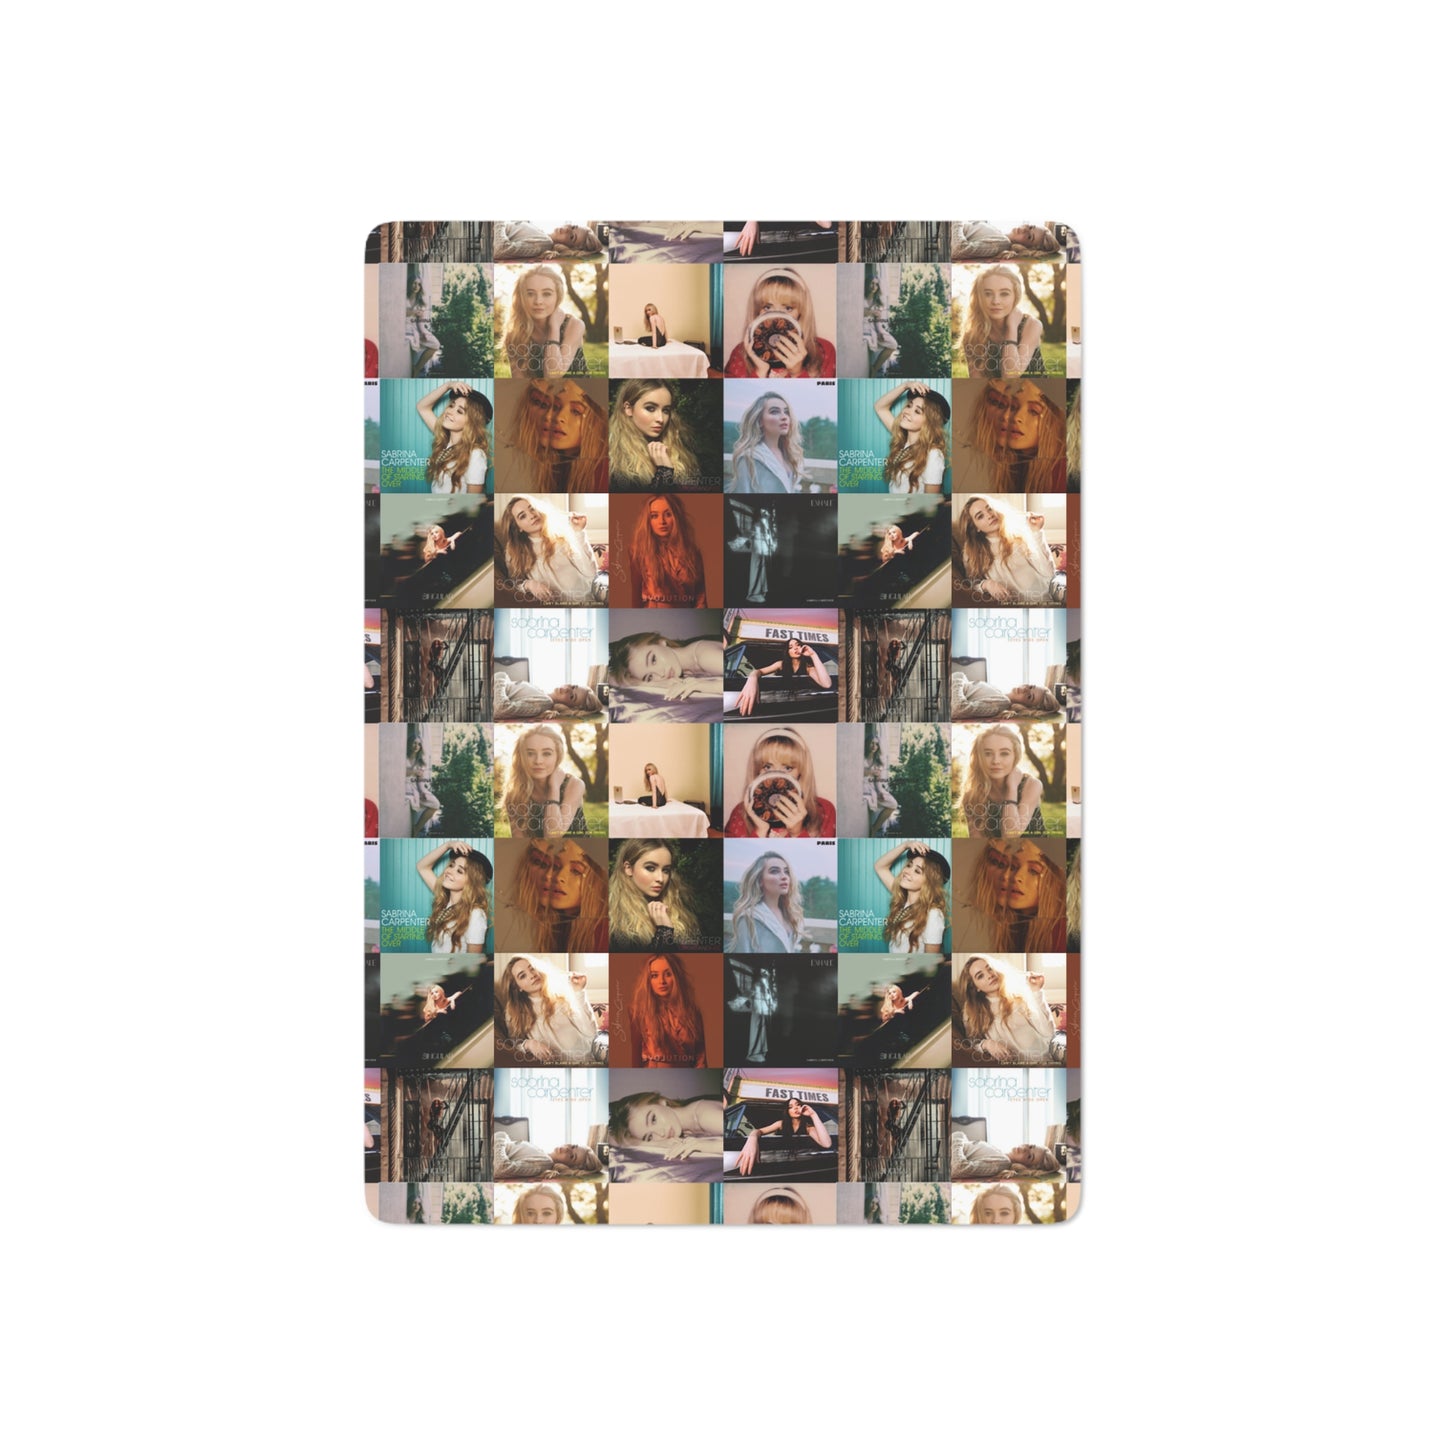 Sabrina Carpenter Album Cover Collage Playing Cards